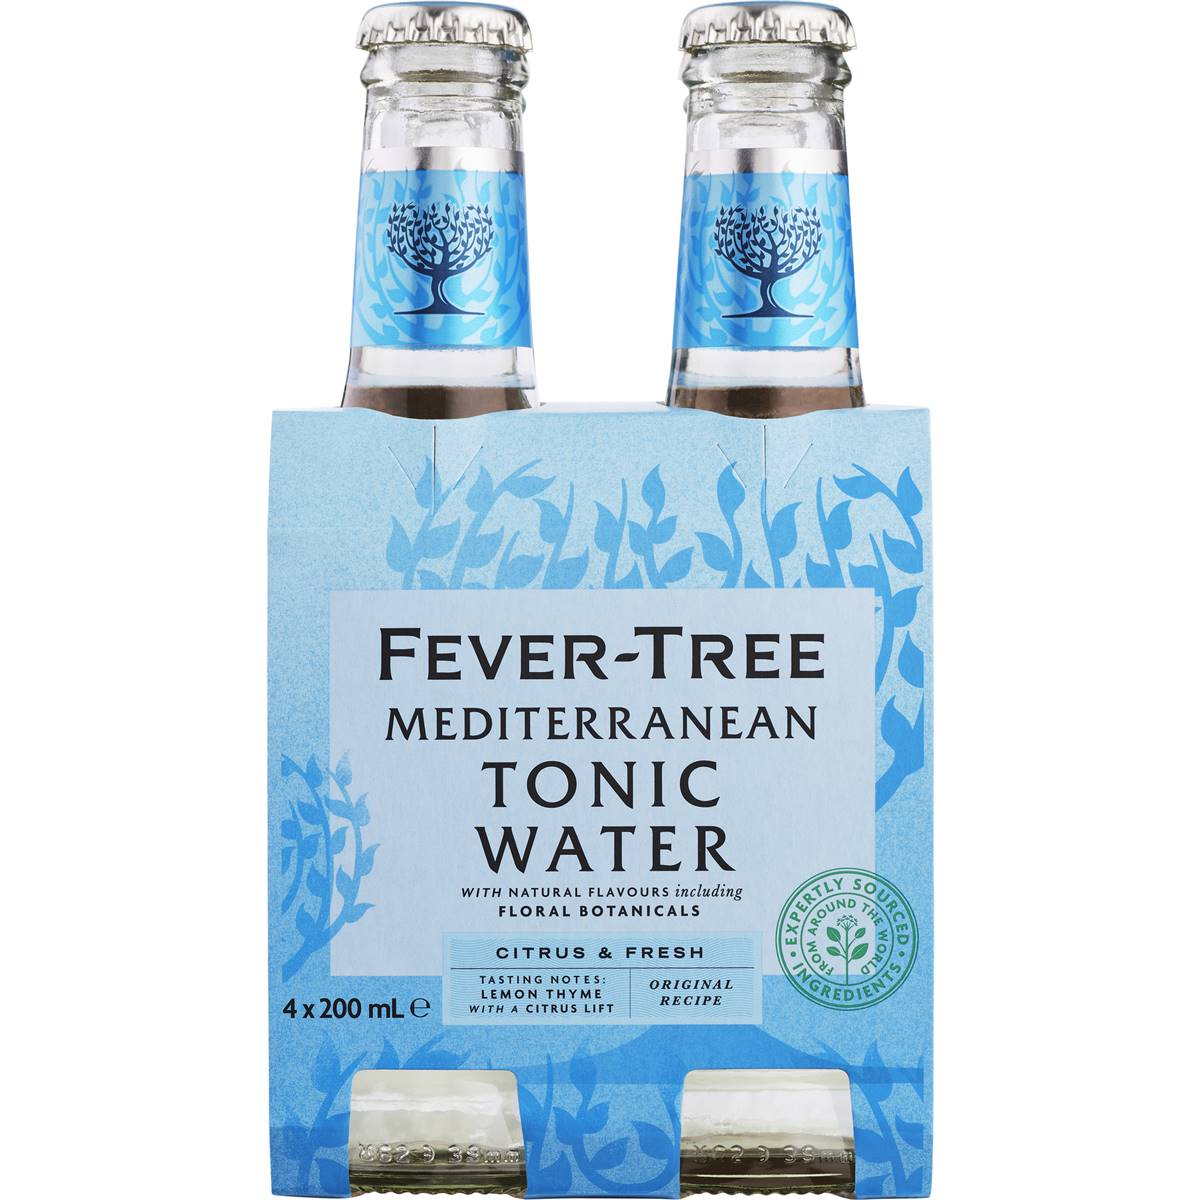 Fever-tree Mediterranean Tonic Water 4x200ml